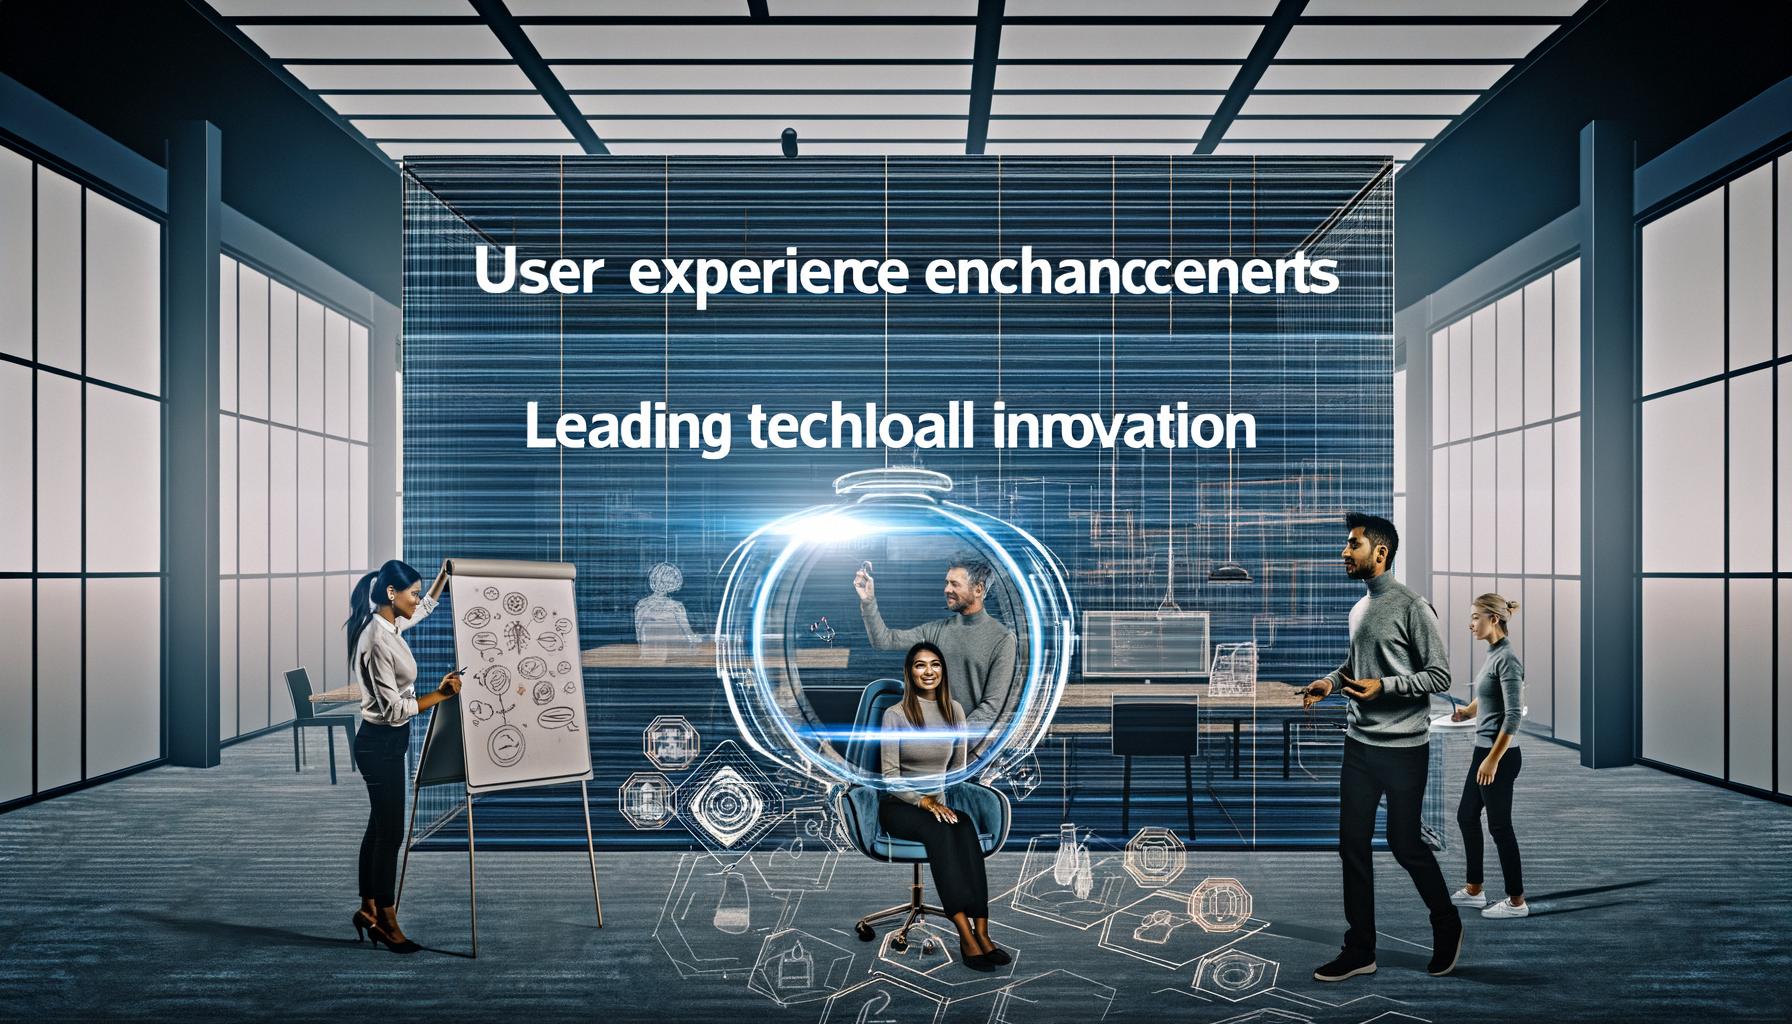 User experience enhancements lead tech innovation Balanced News